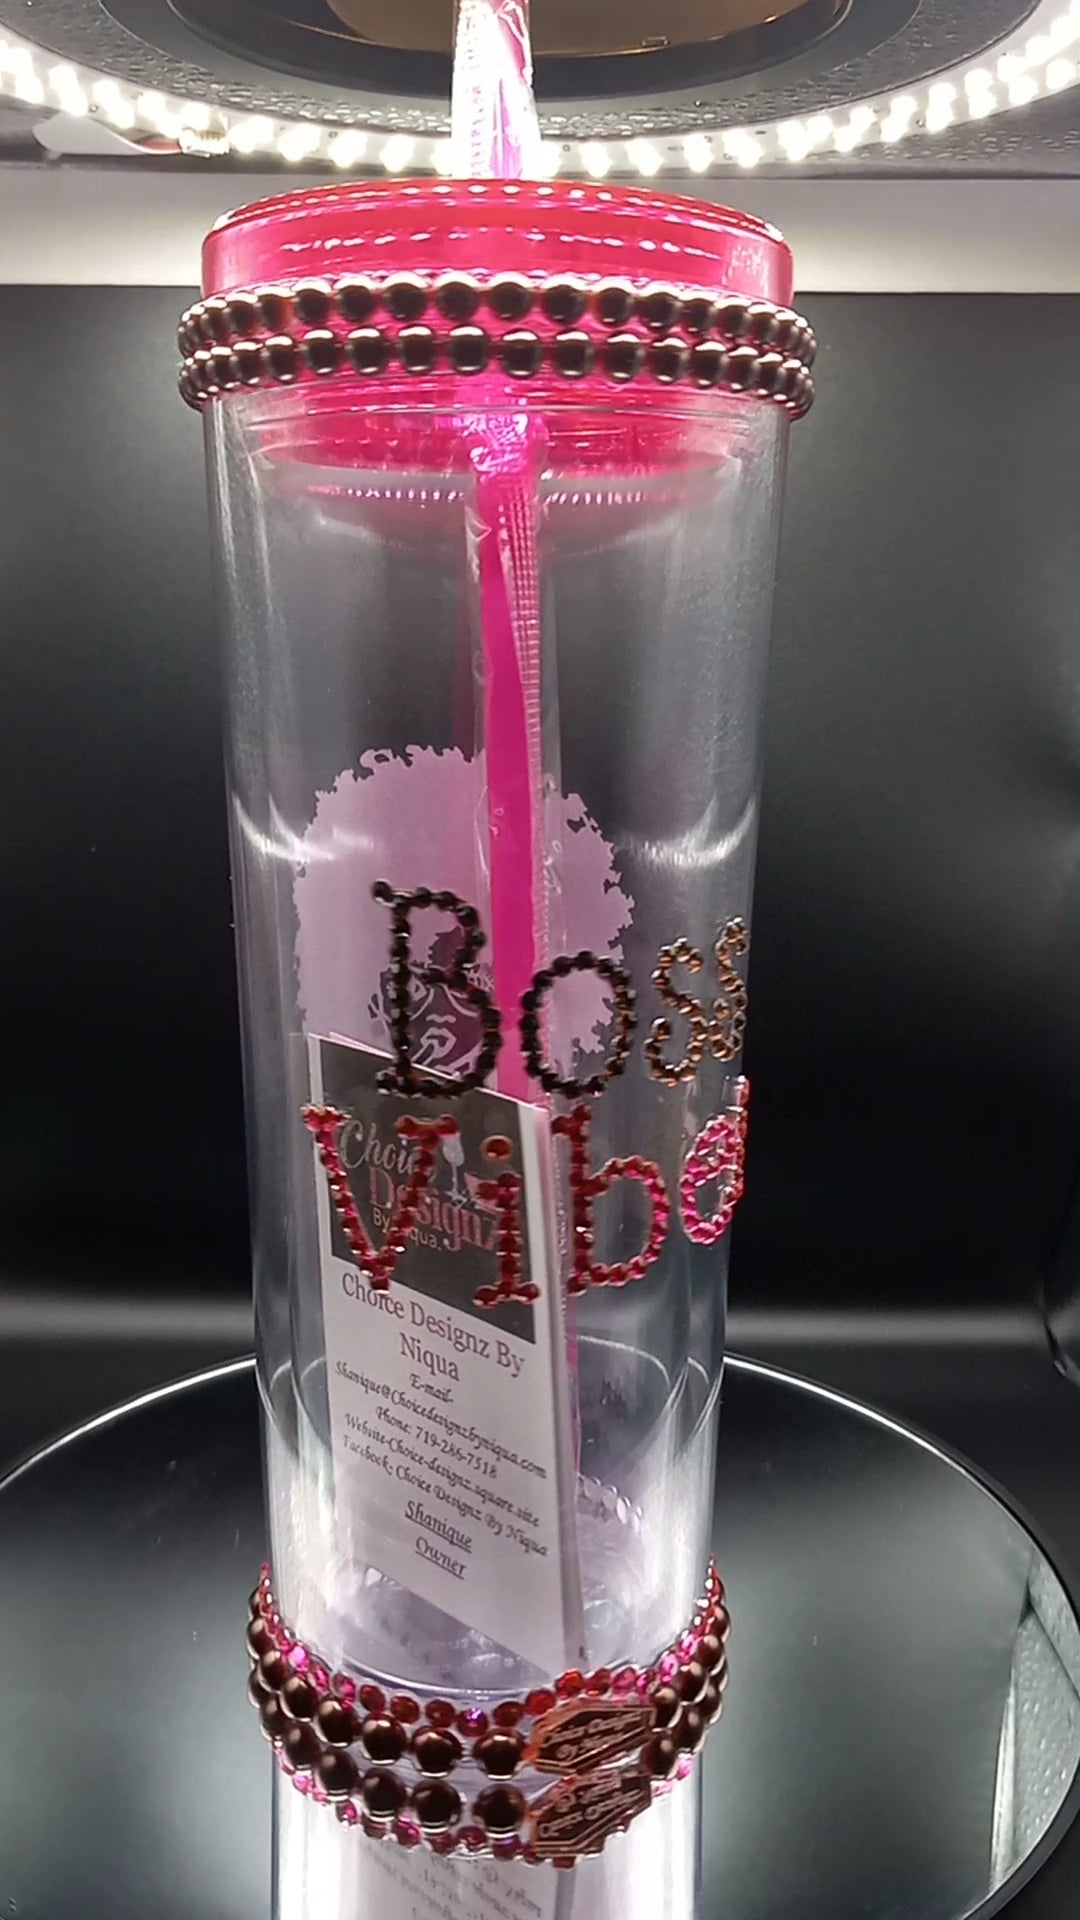 Breast Cancer Glitter Wine Glass, Flat Bottom Wine Glasses, Personalized  Glitter Wine Glasses 